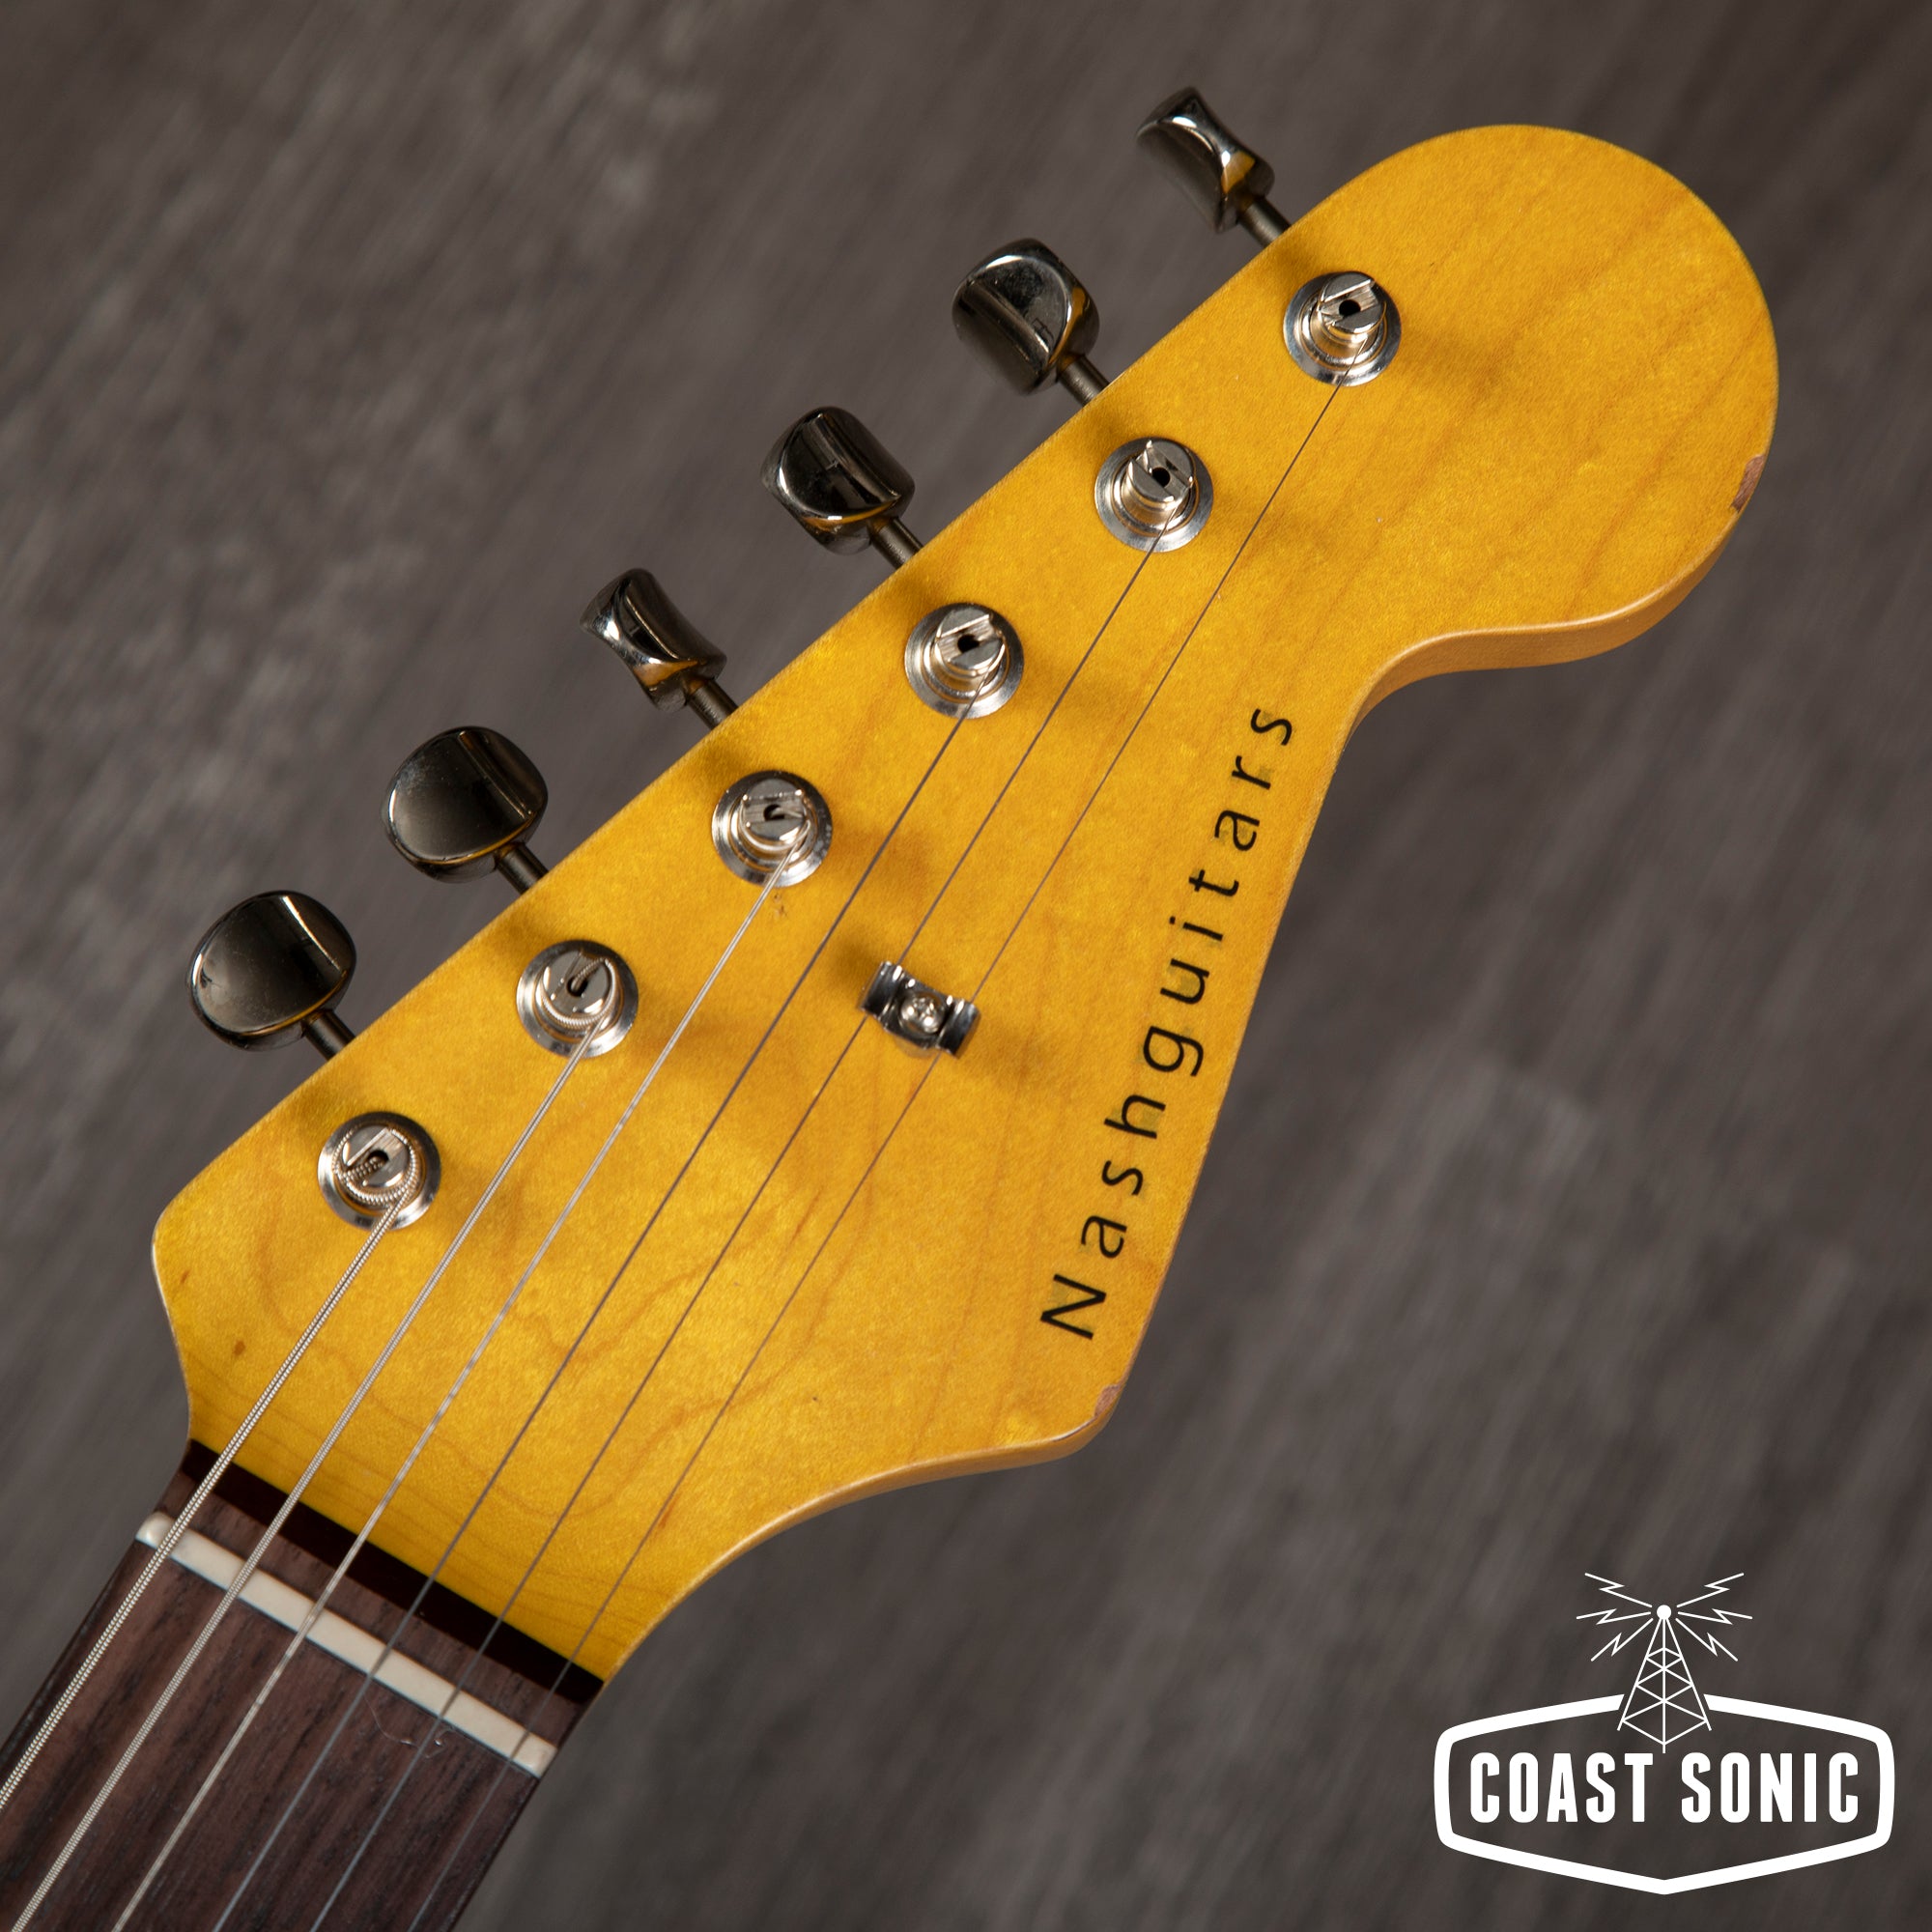 Nash Guitars S-63 Olympic White over 3 tone sunburst